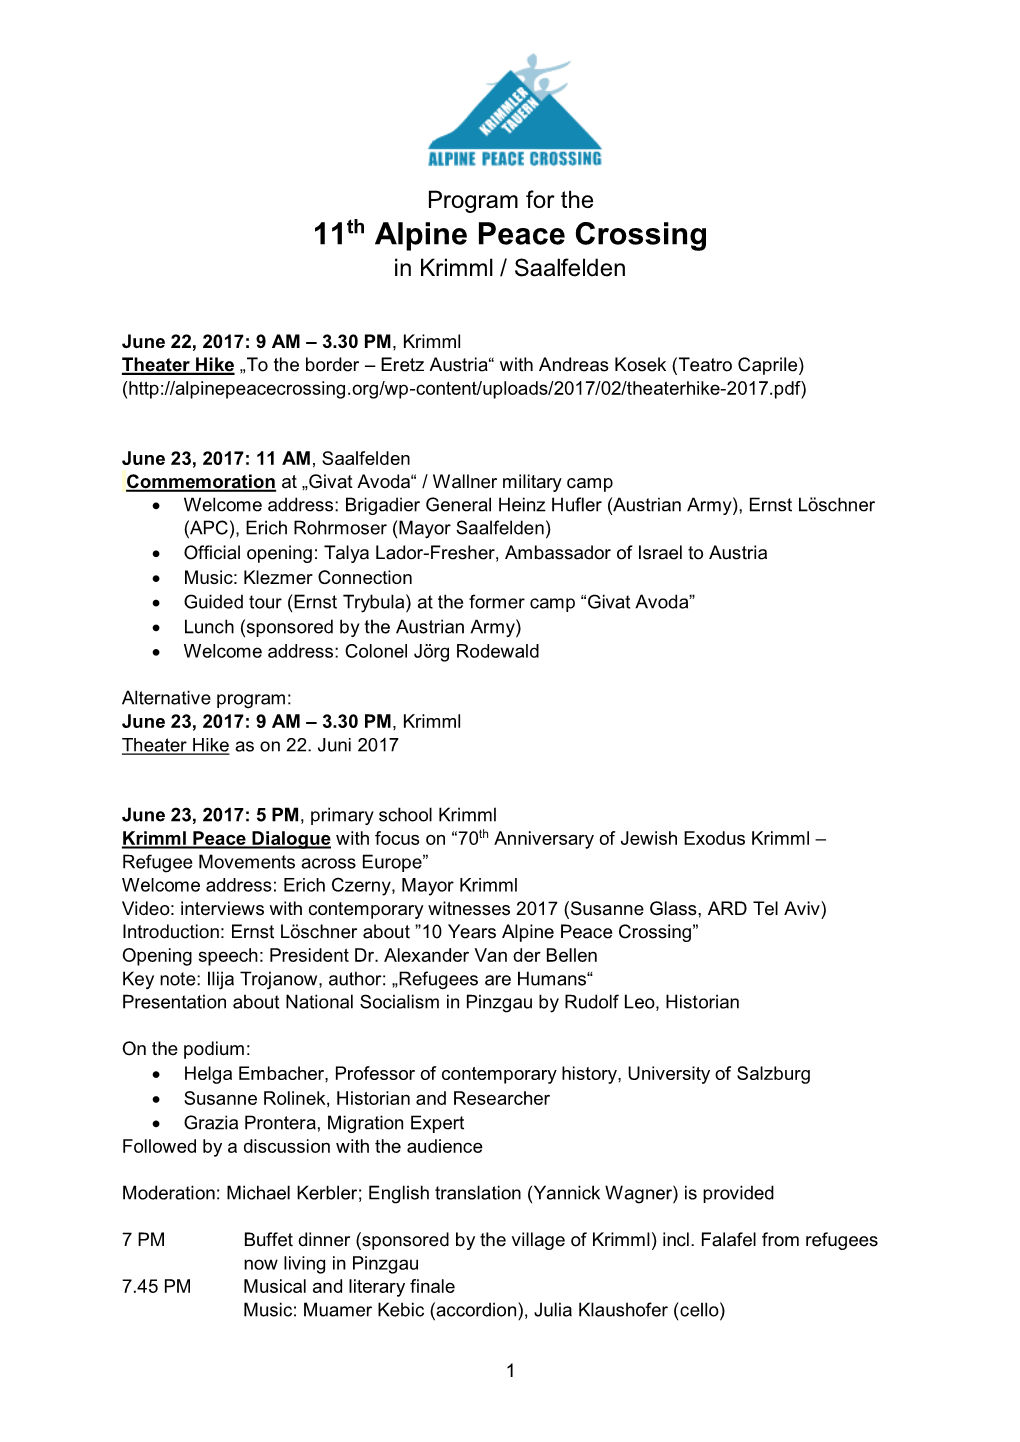 Program for the 11Th Alpine Peace Crossing in Krimml / Saalfelden